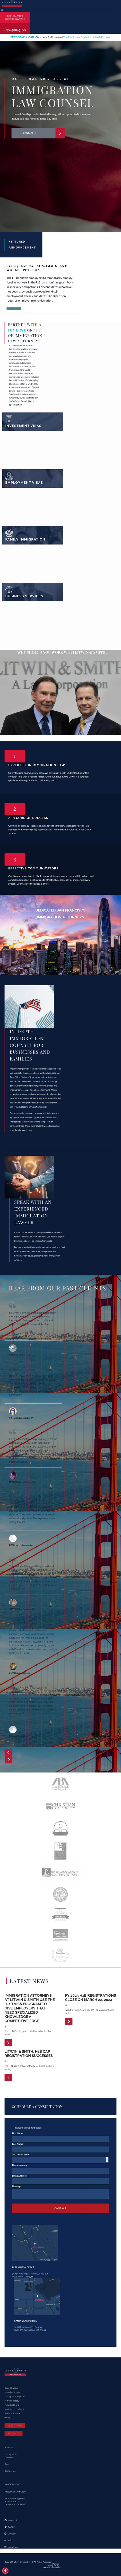 Litwin & Associates, A Law Corporation - South San Francisco CA Lawyers